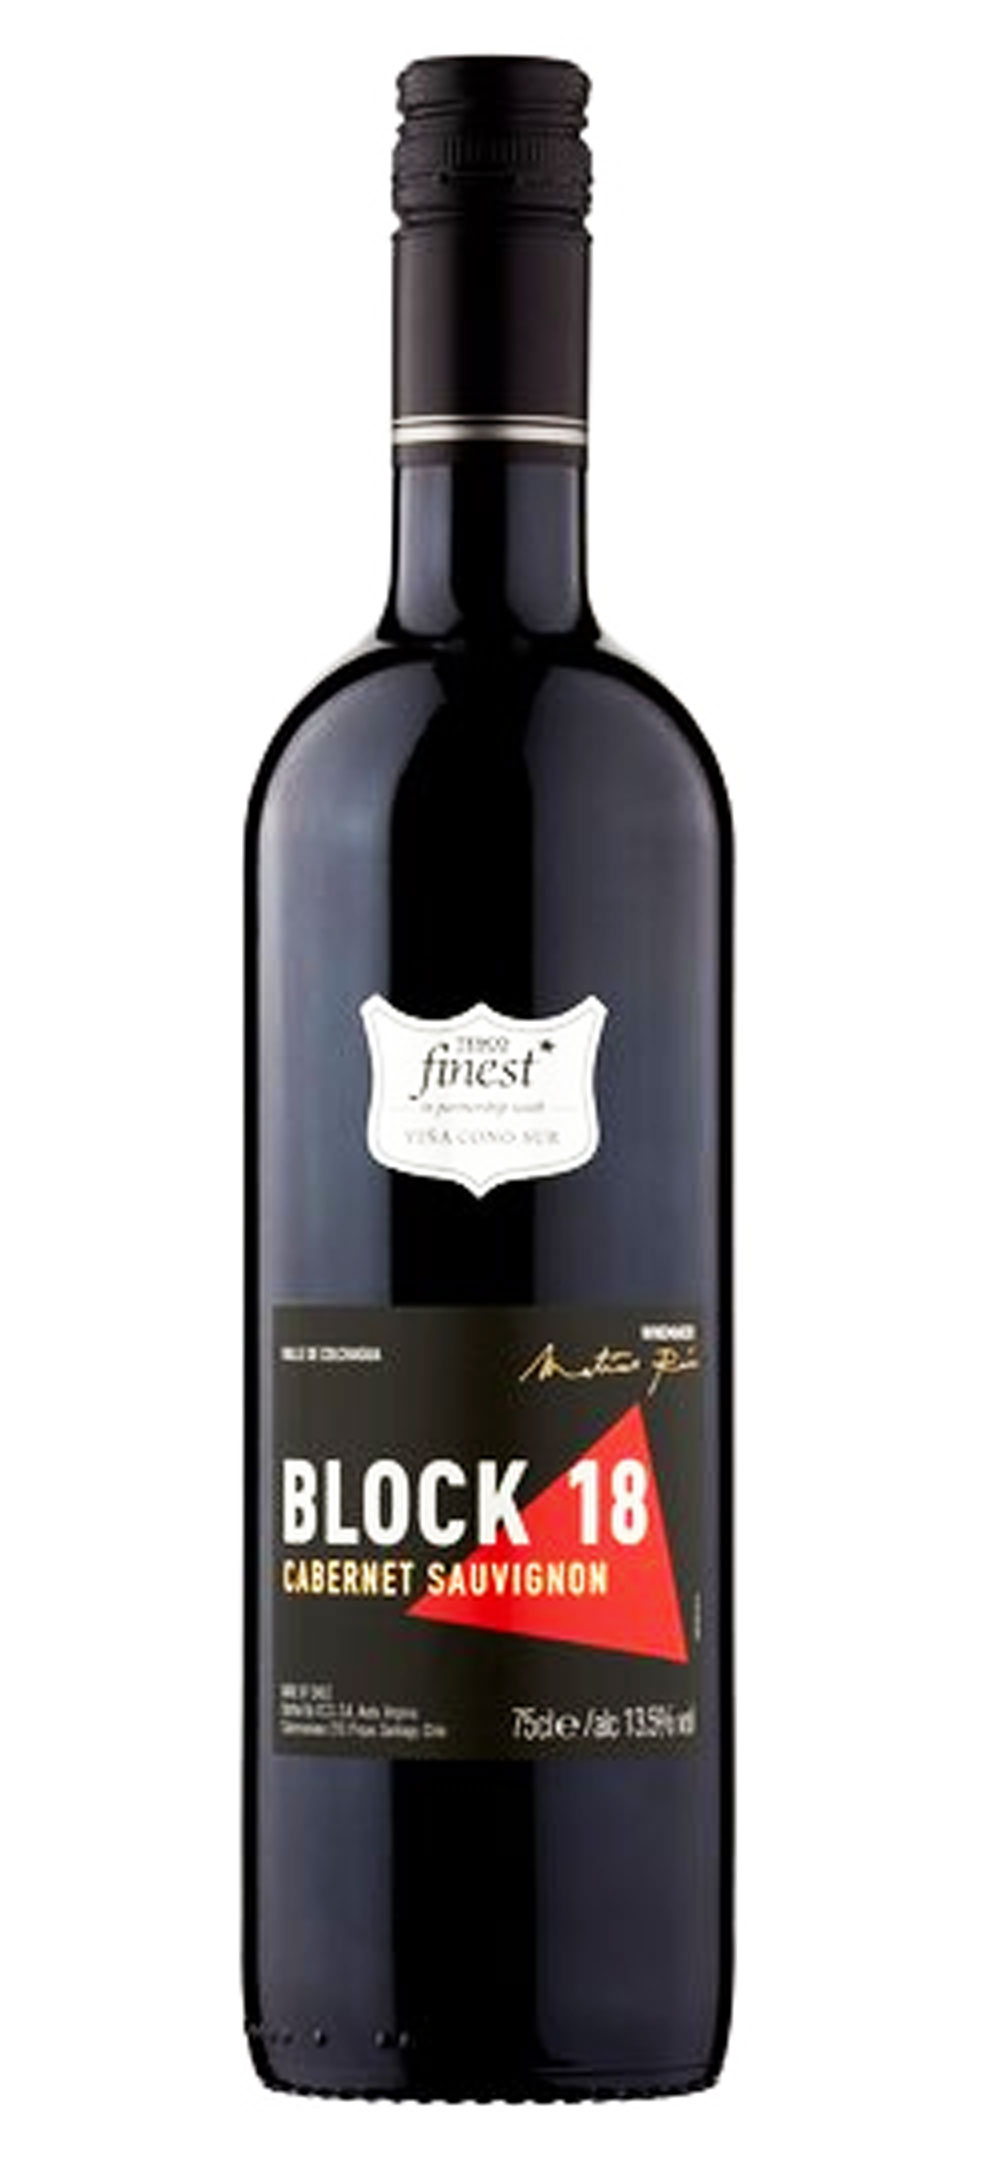 Block 18 from Tesco Finest